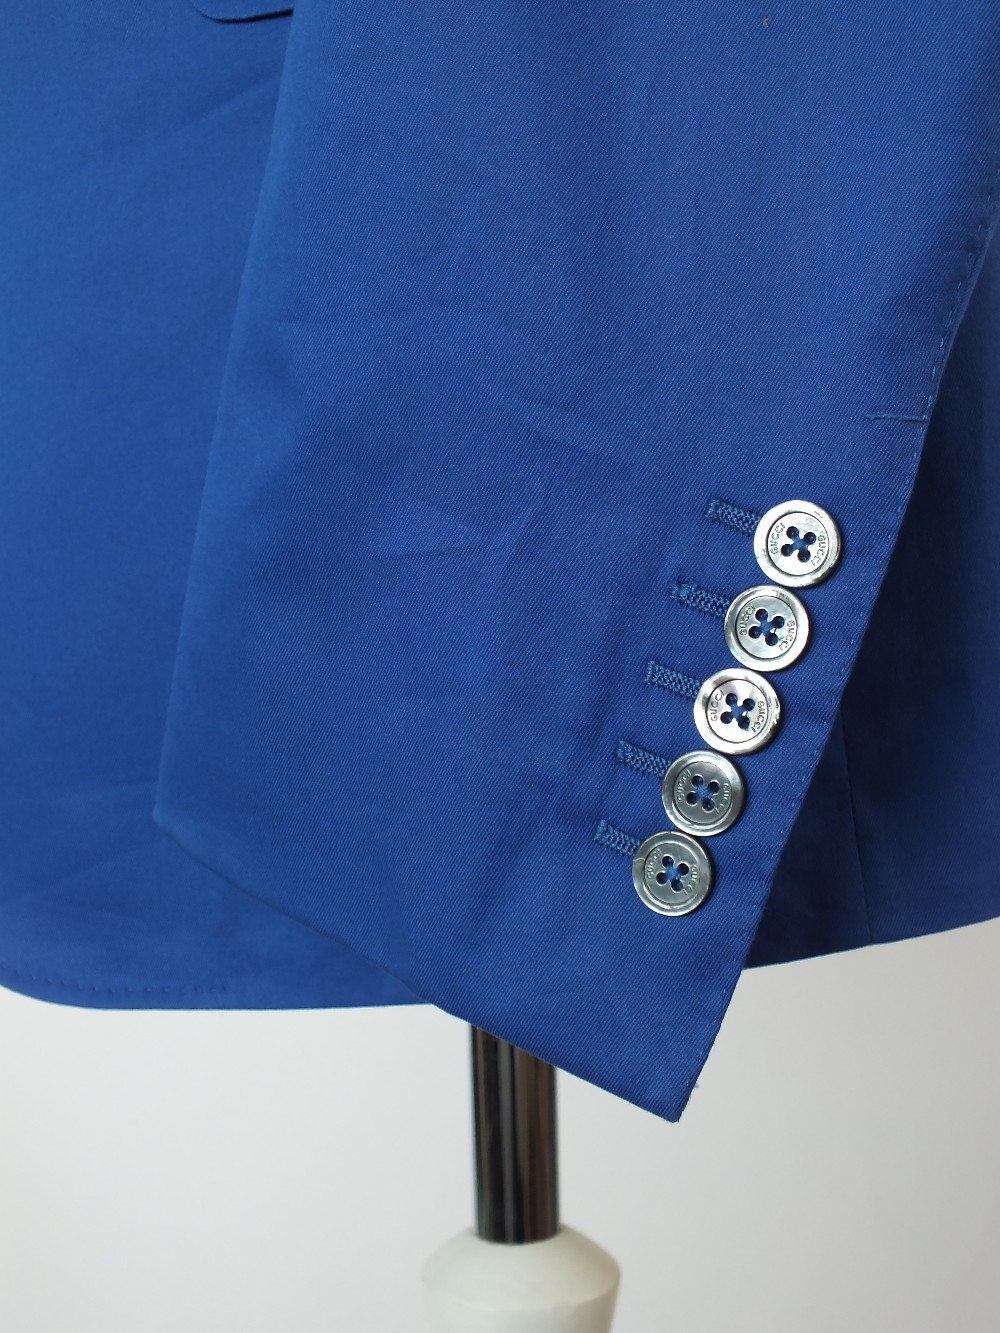 A Gucci suit, blue, contrast decorative lining, single vent, Italian size 52R, 100% cotton, flat - Image 7 of 8